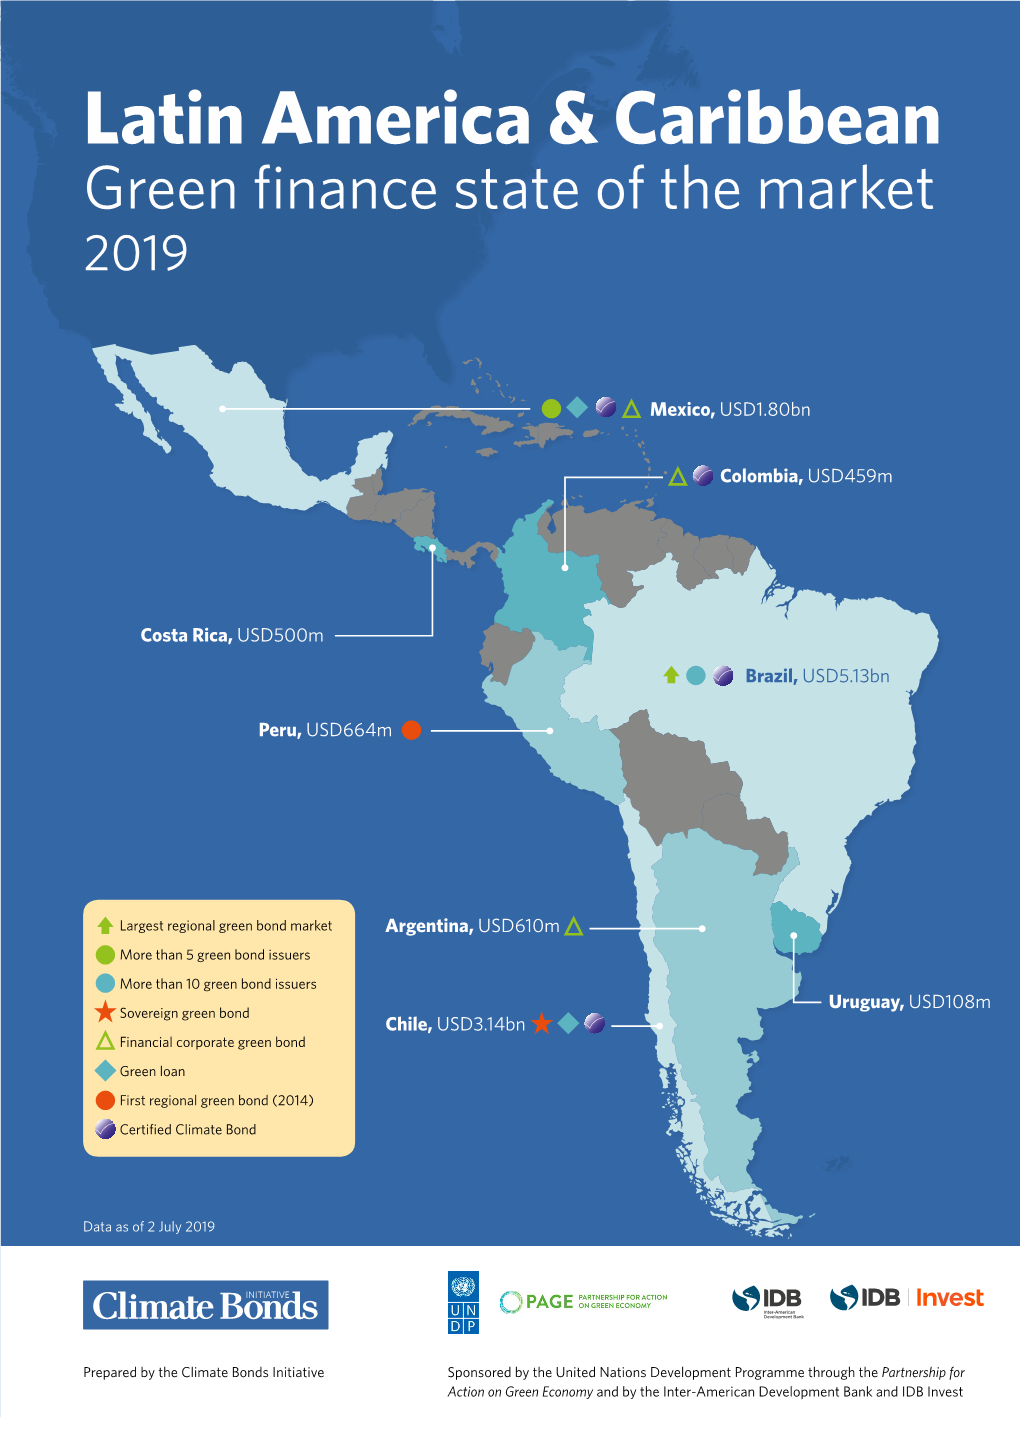 The Latin America & Caribbean Green Bond Market